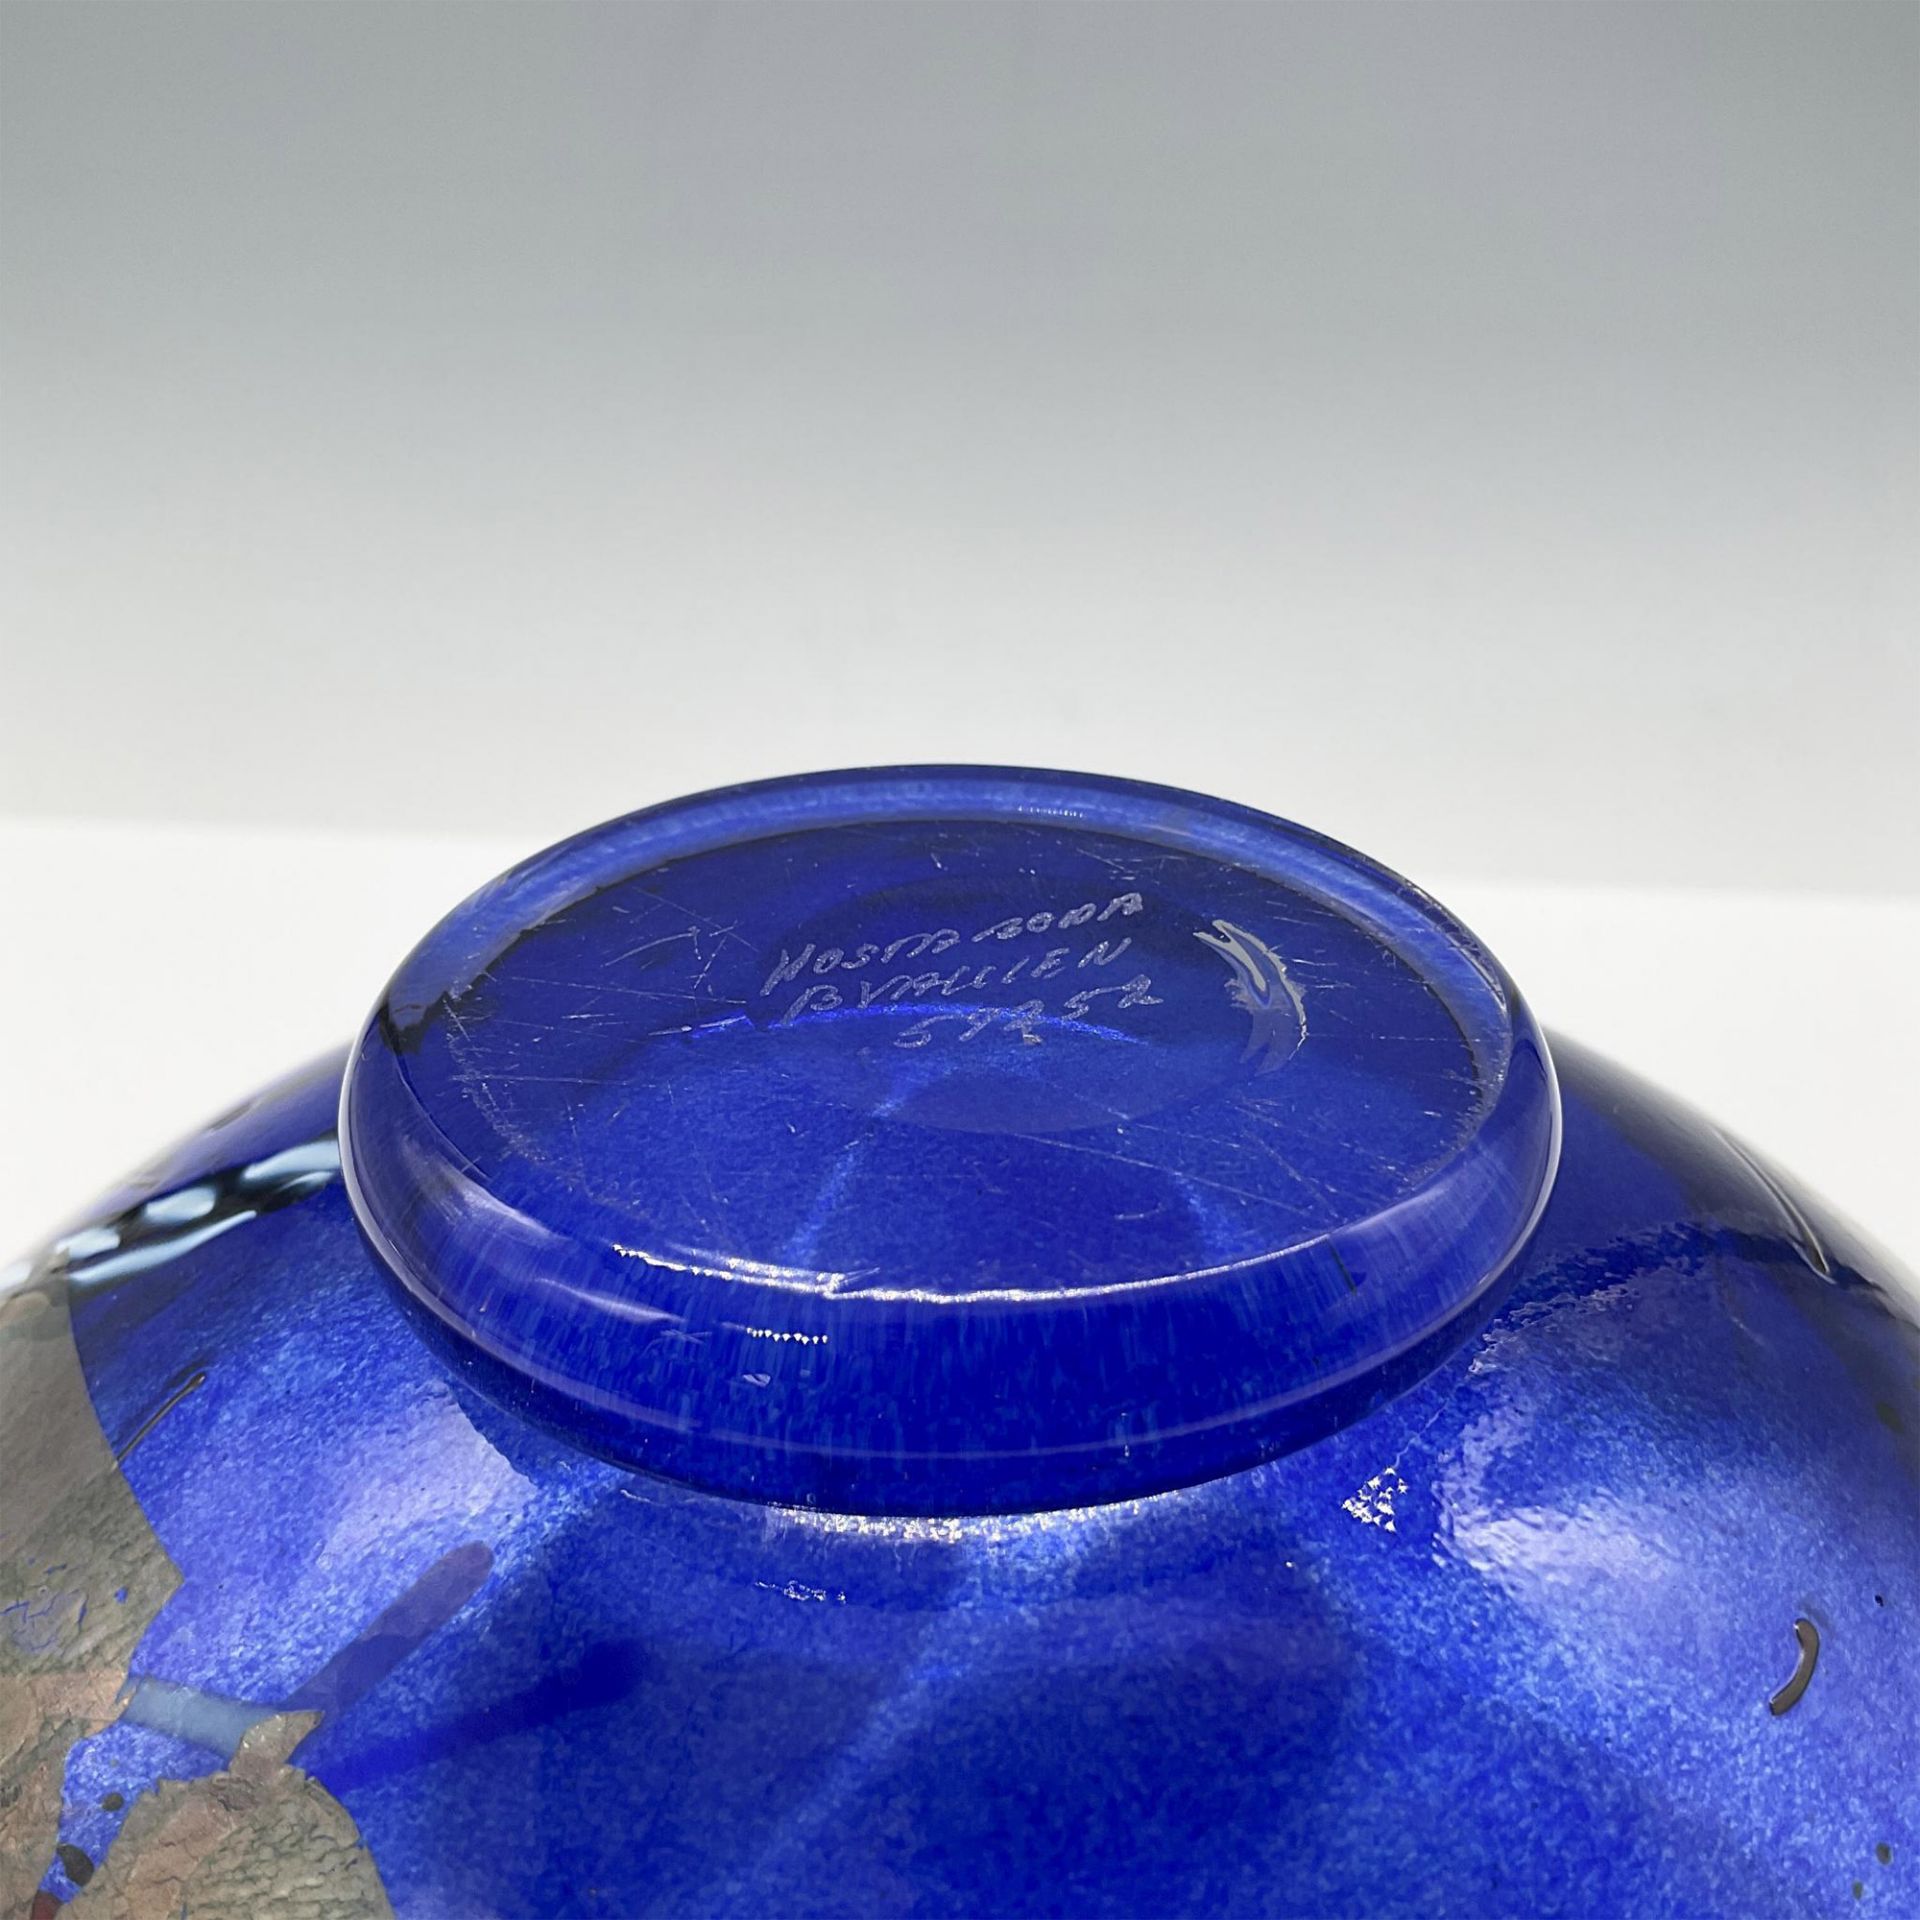 Kosta Boda Crystal Decorative Bowl, Satellite Blue 59252 - Image 4 of 4